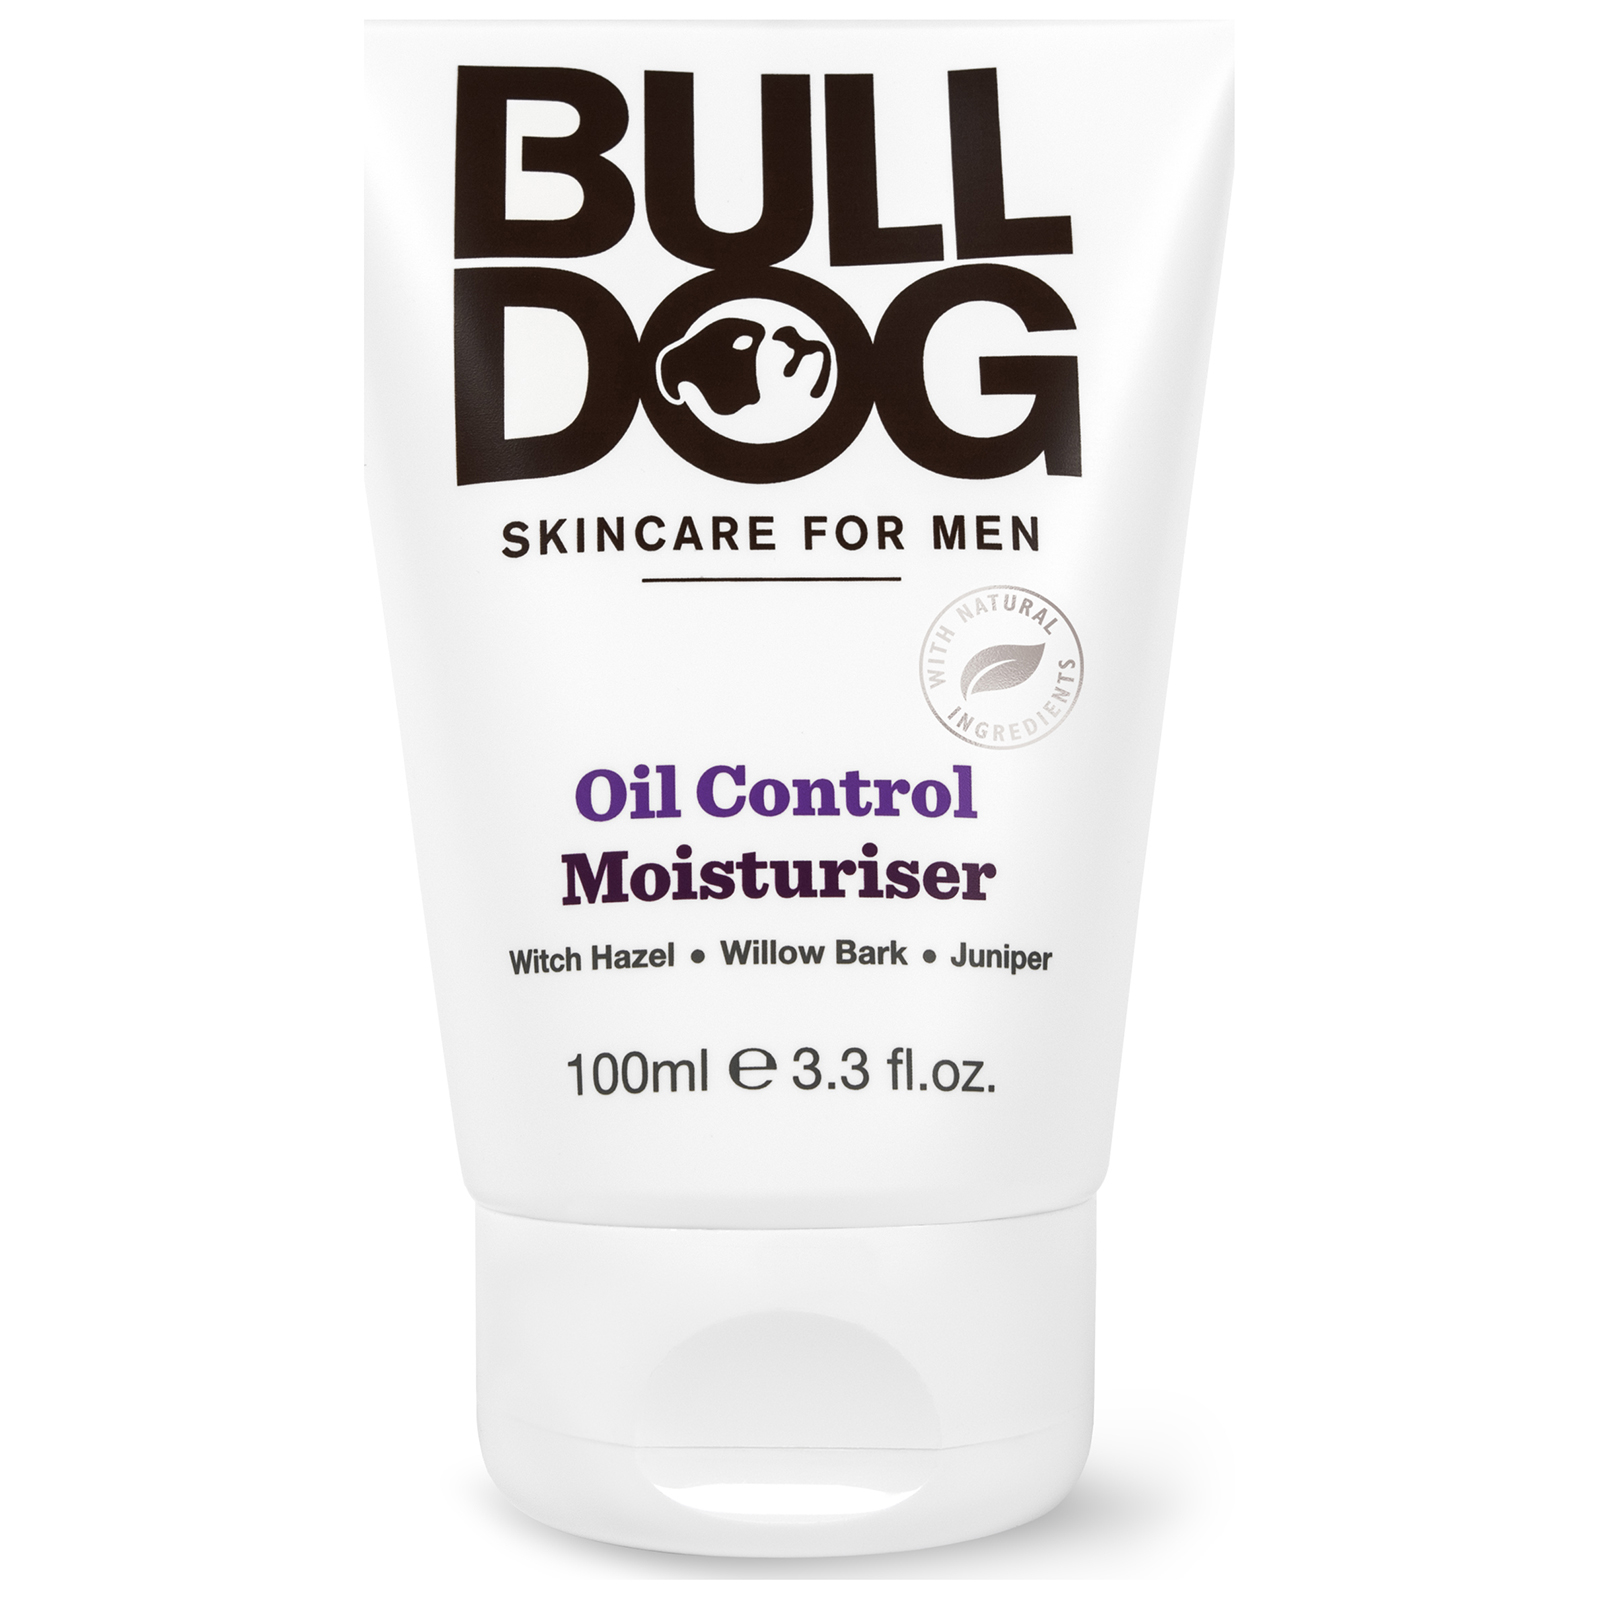 Bulldog Oil Control Moisturiser 100ml lookfantastic.com imagine